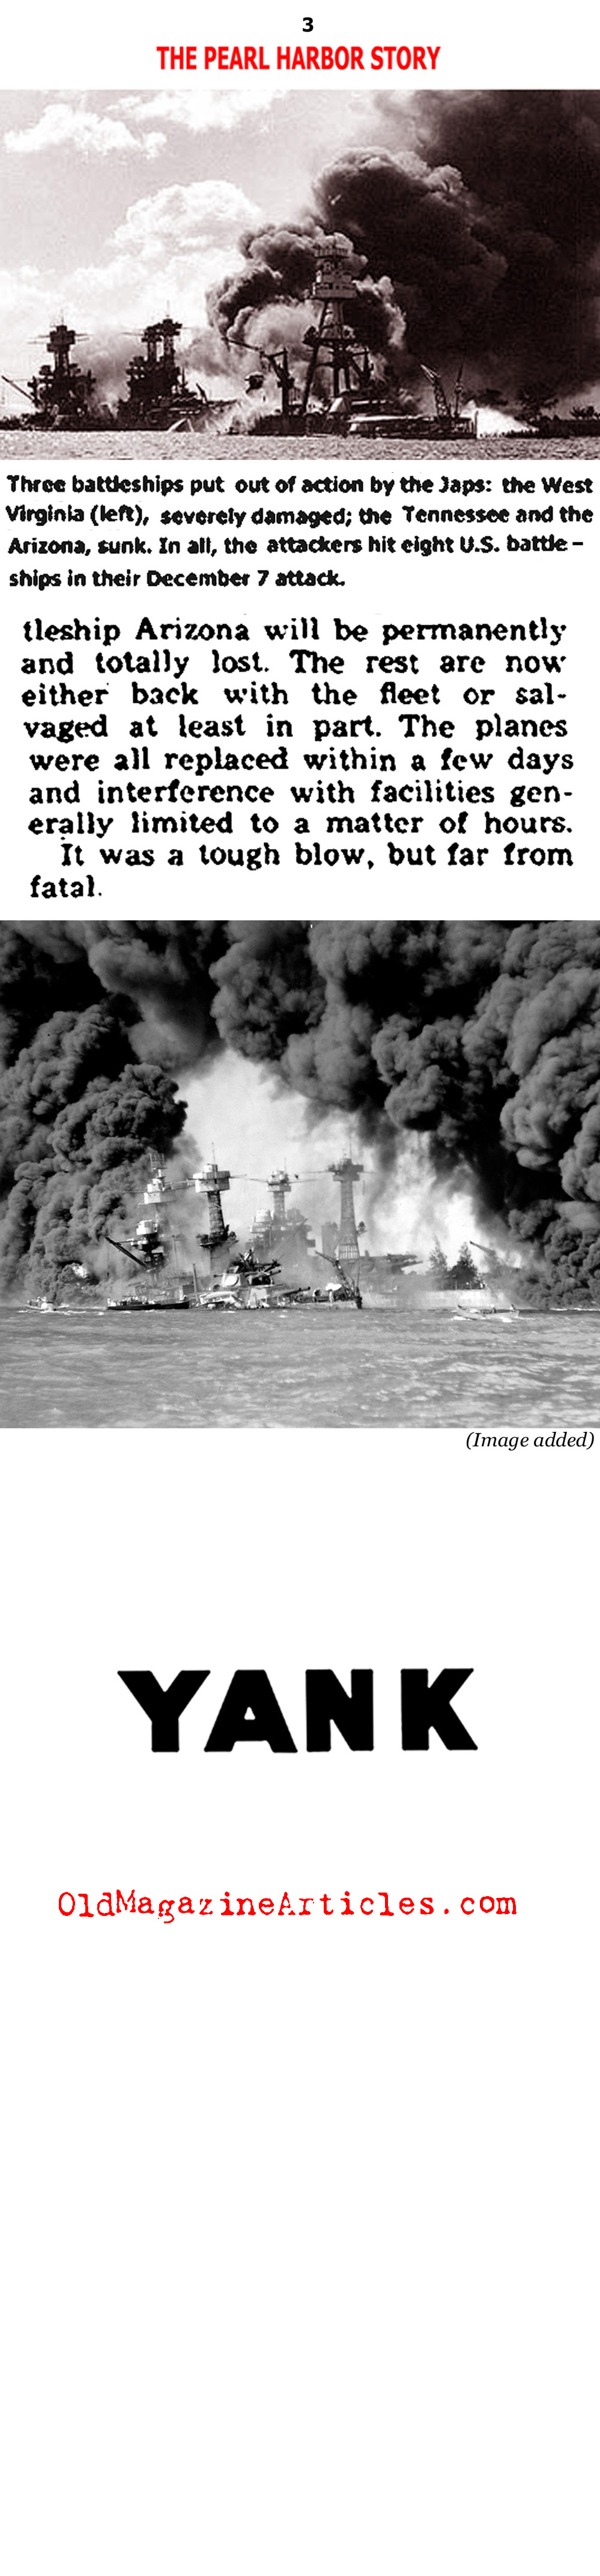 The Pearl Harbor Story (Yank Magazine, 1942)